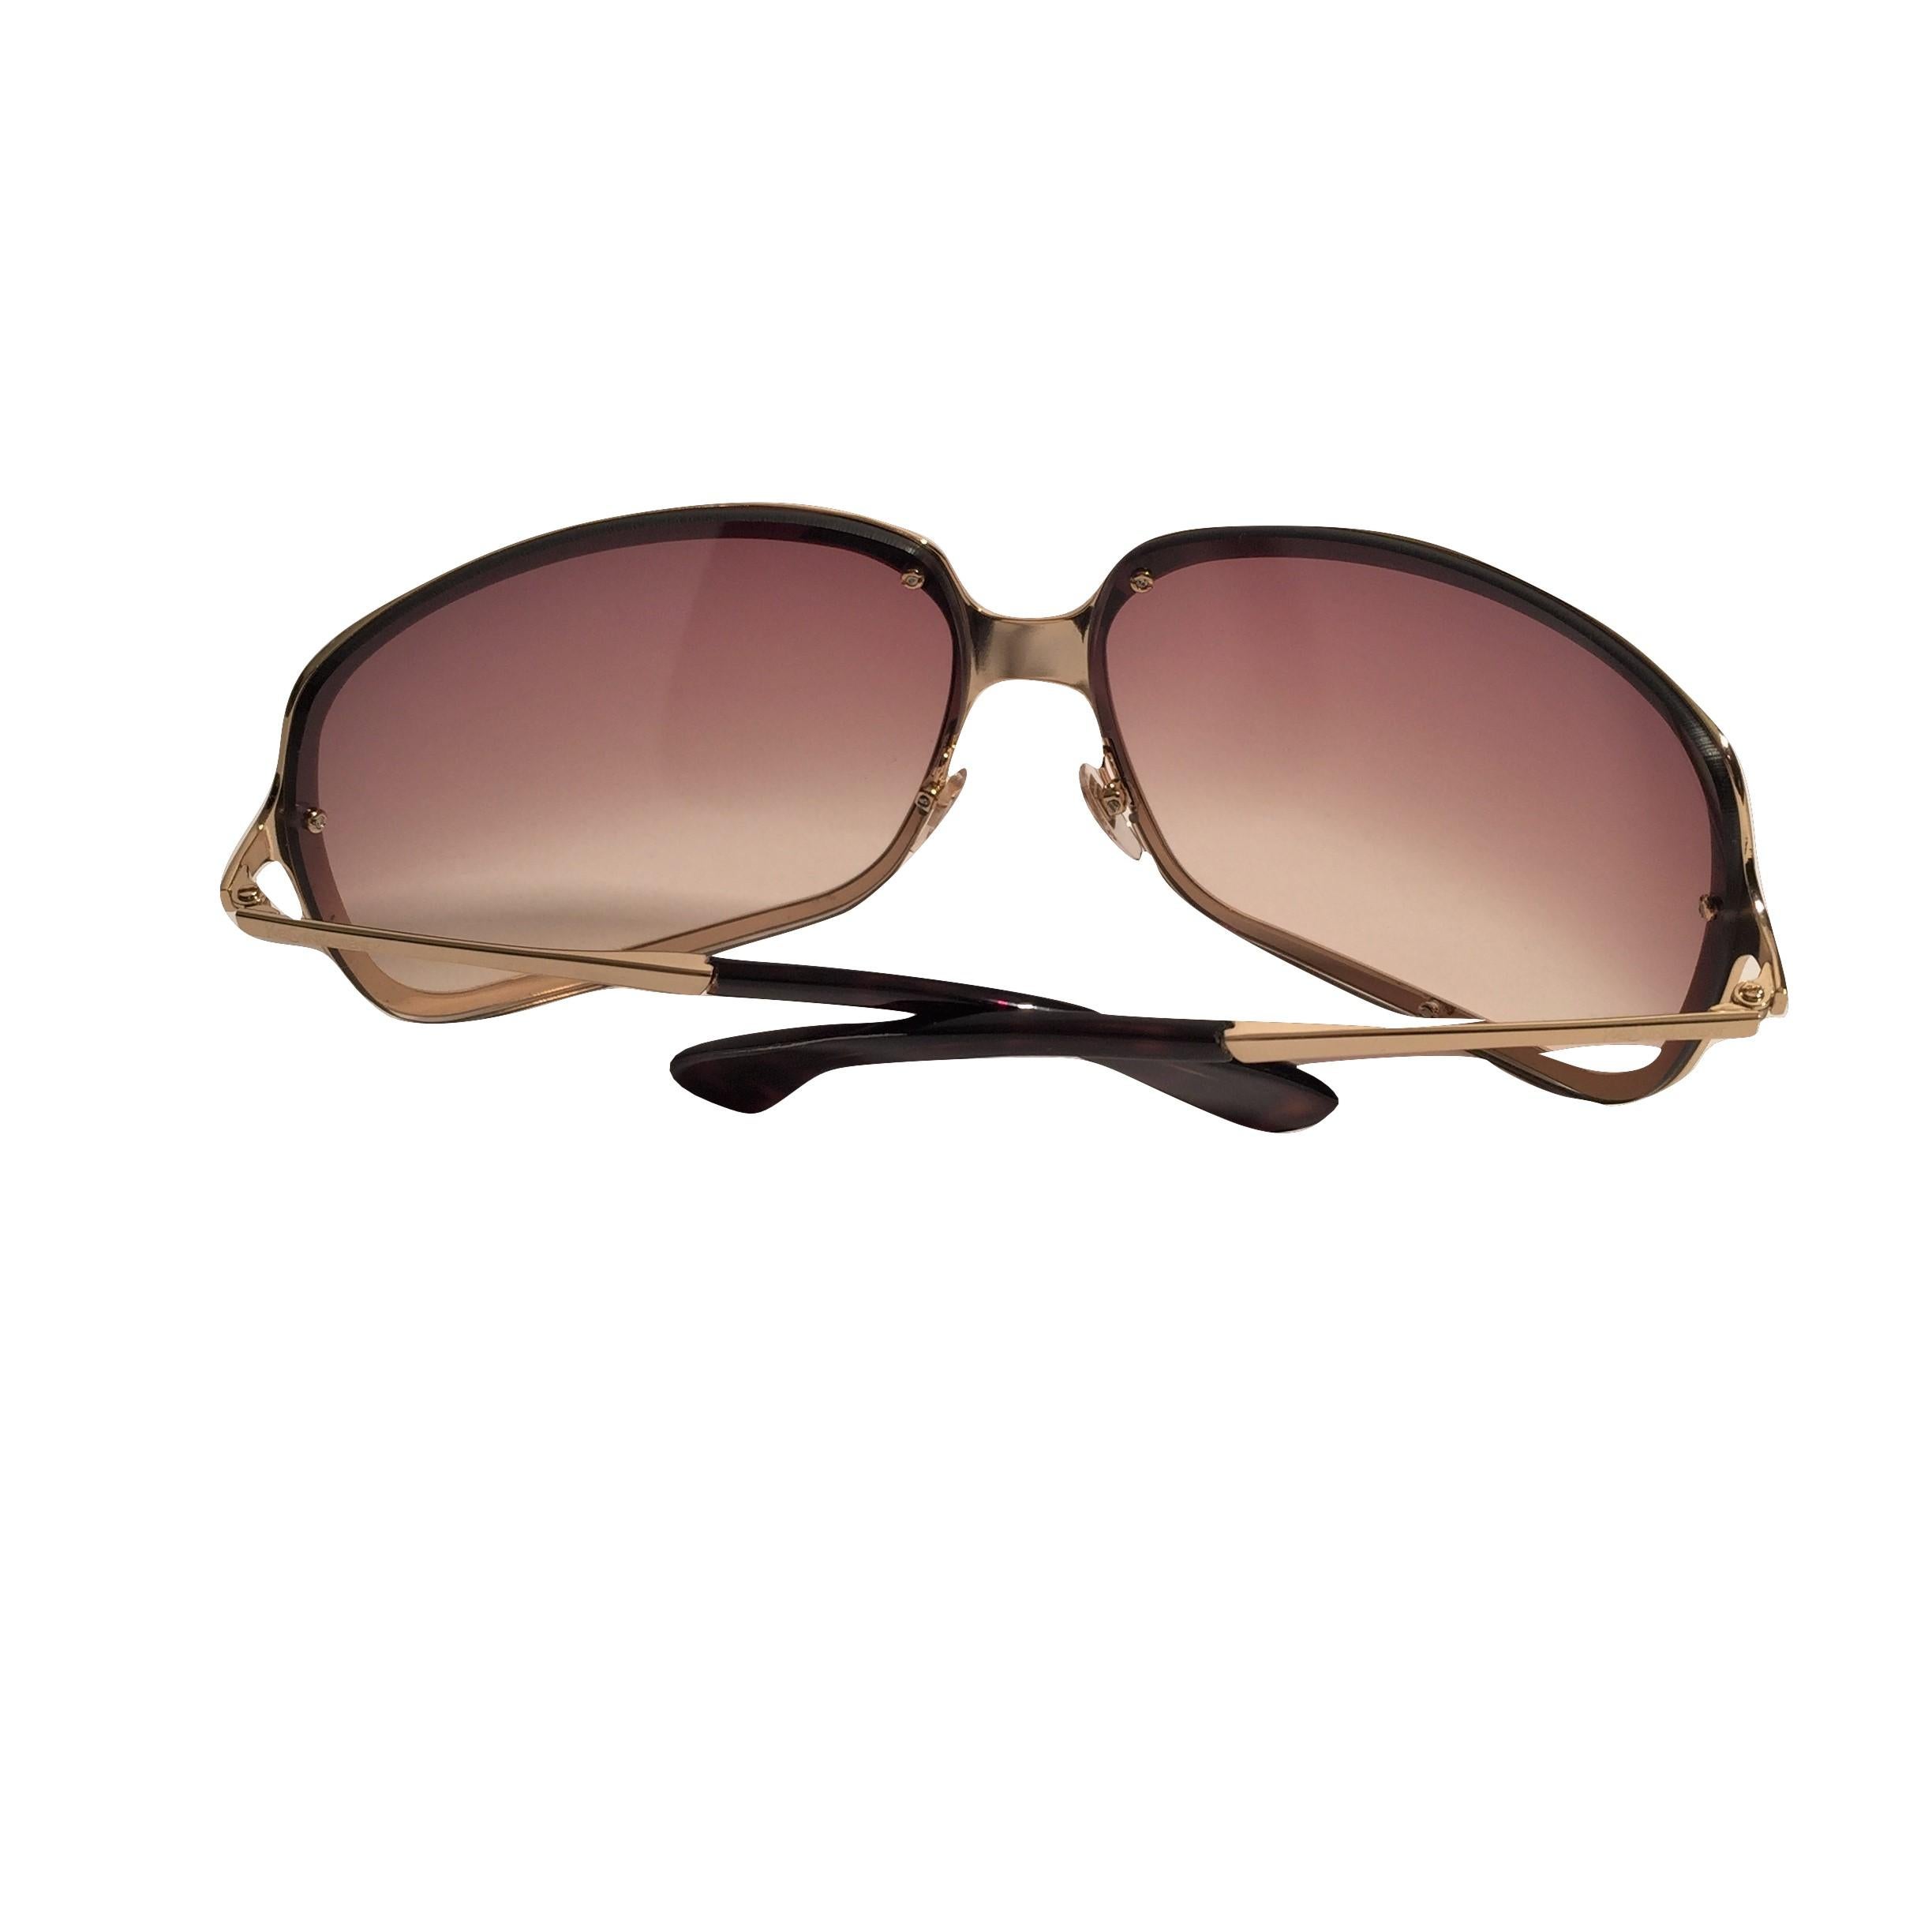 Yves Saint Laurent New YSL Gold Wrap Sunglasses  7